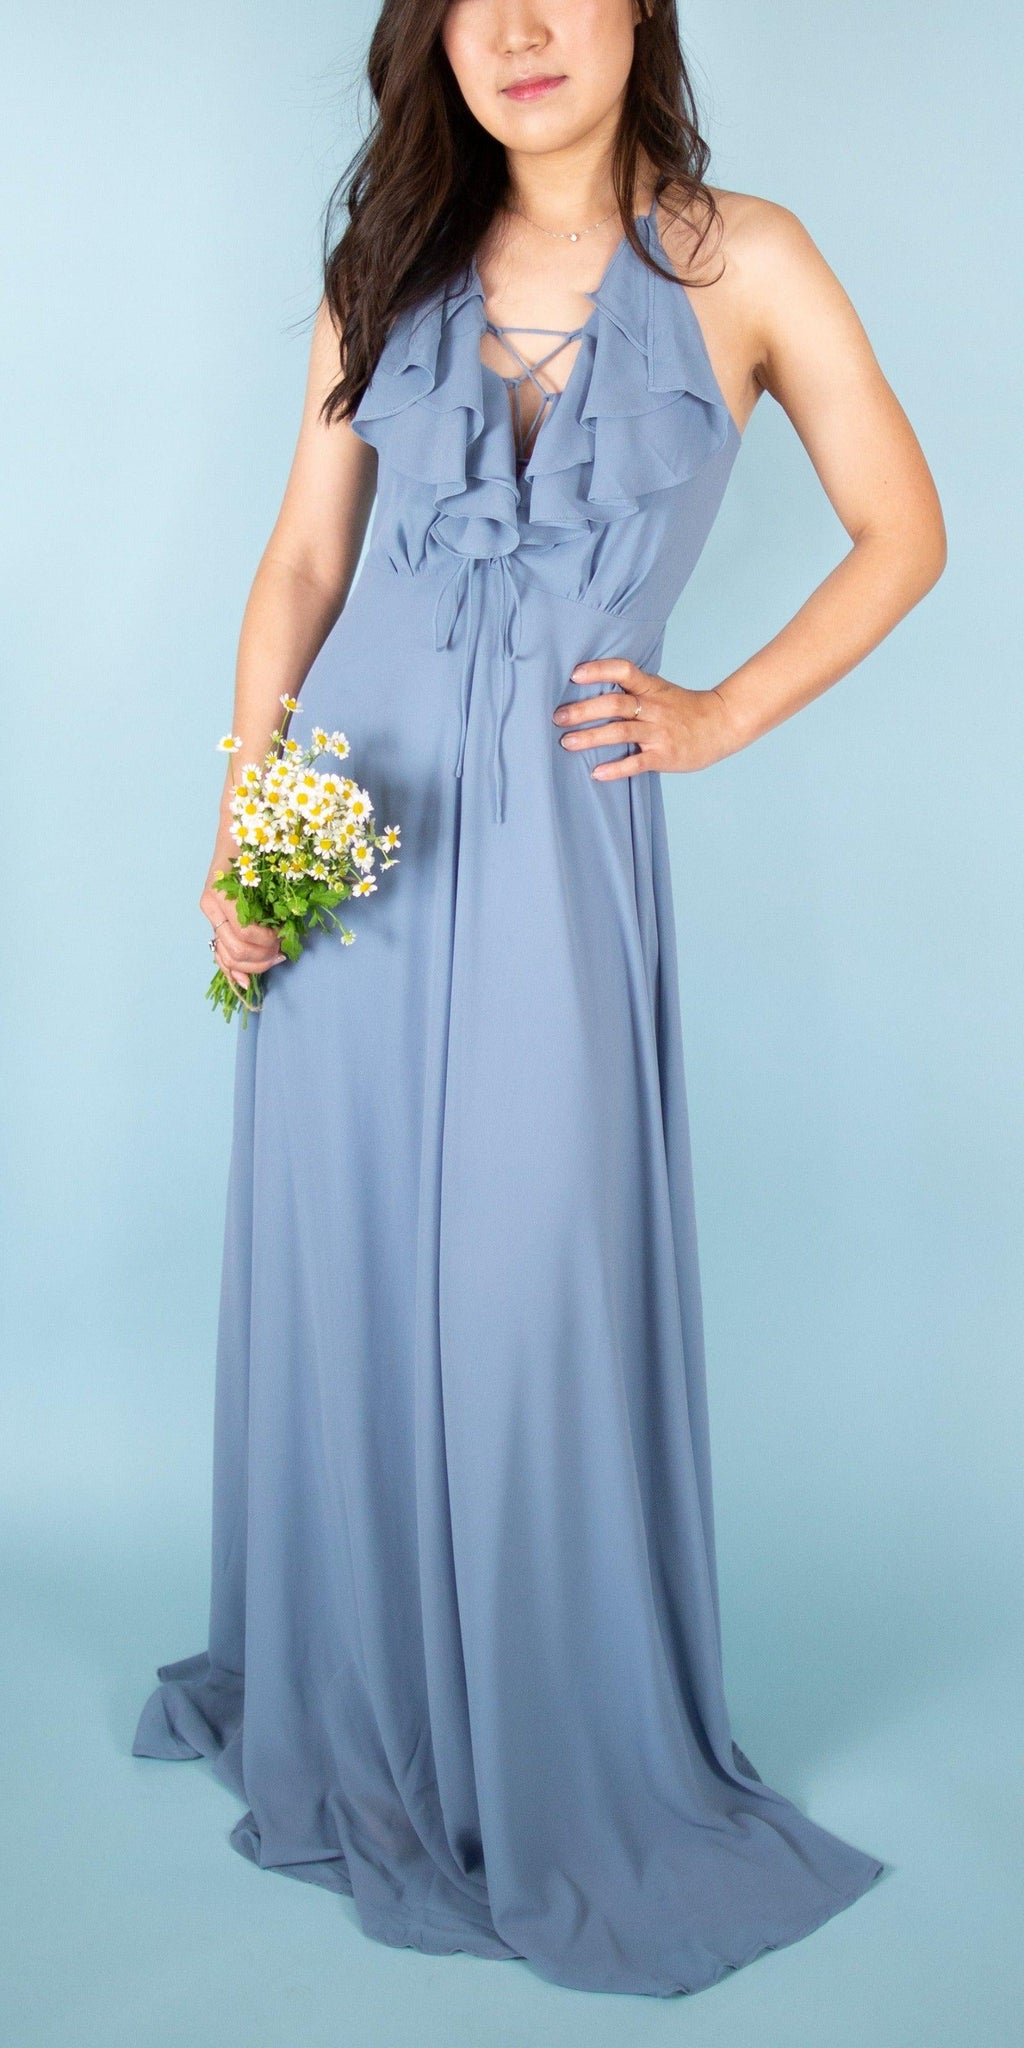 Ruffled Lace-up Dress - Simply Borrowed Dresses